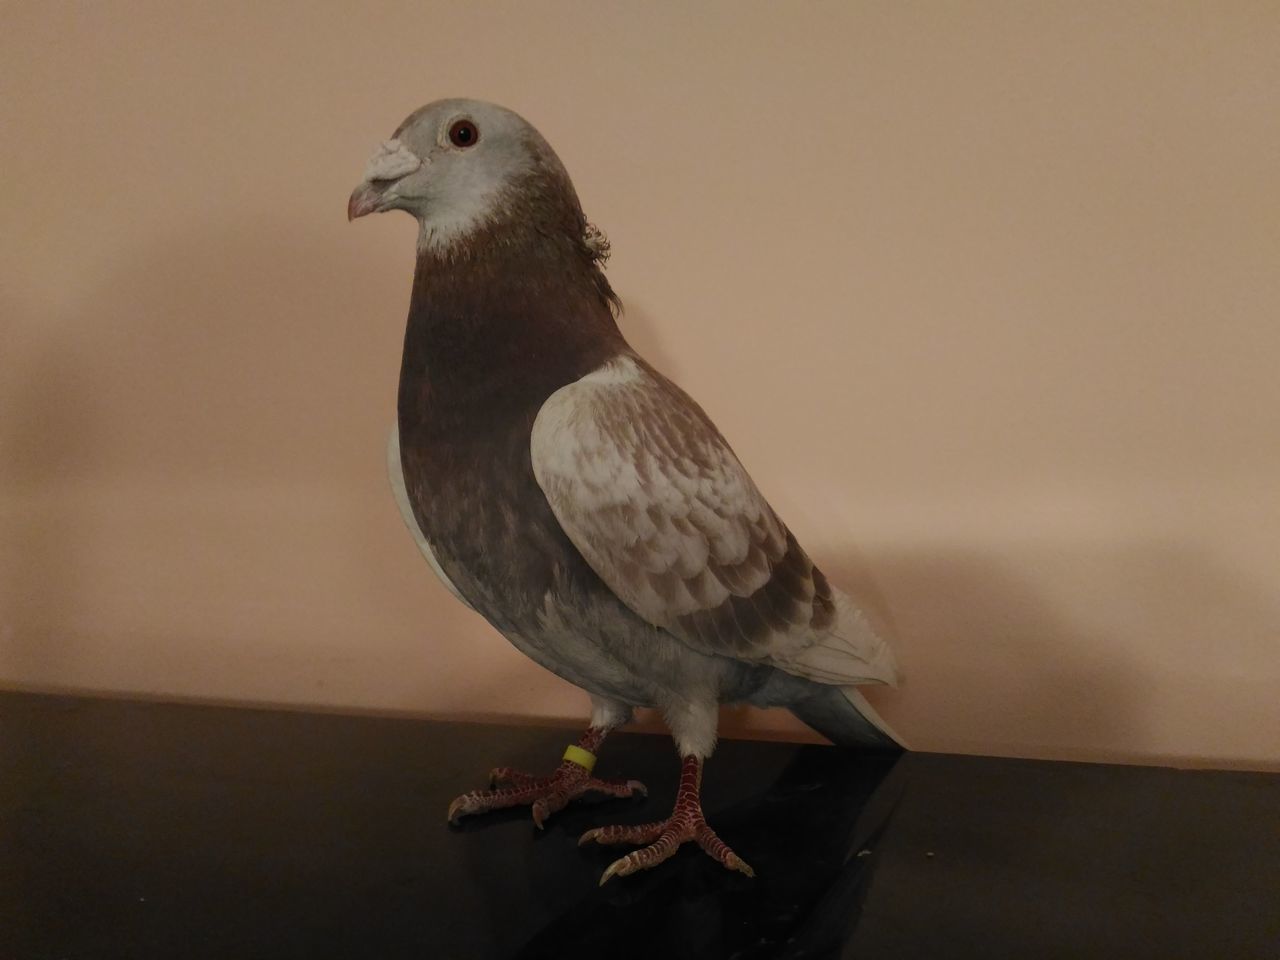 Romania pigeons